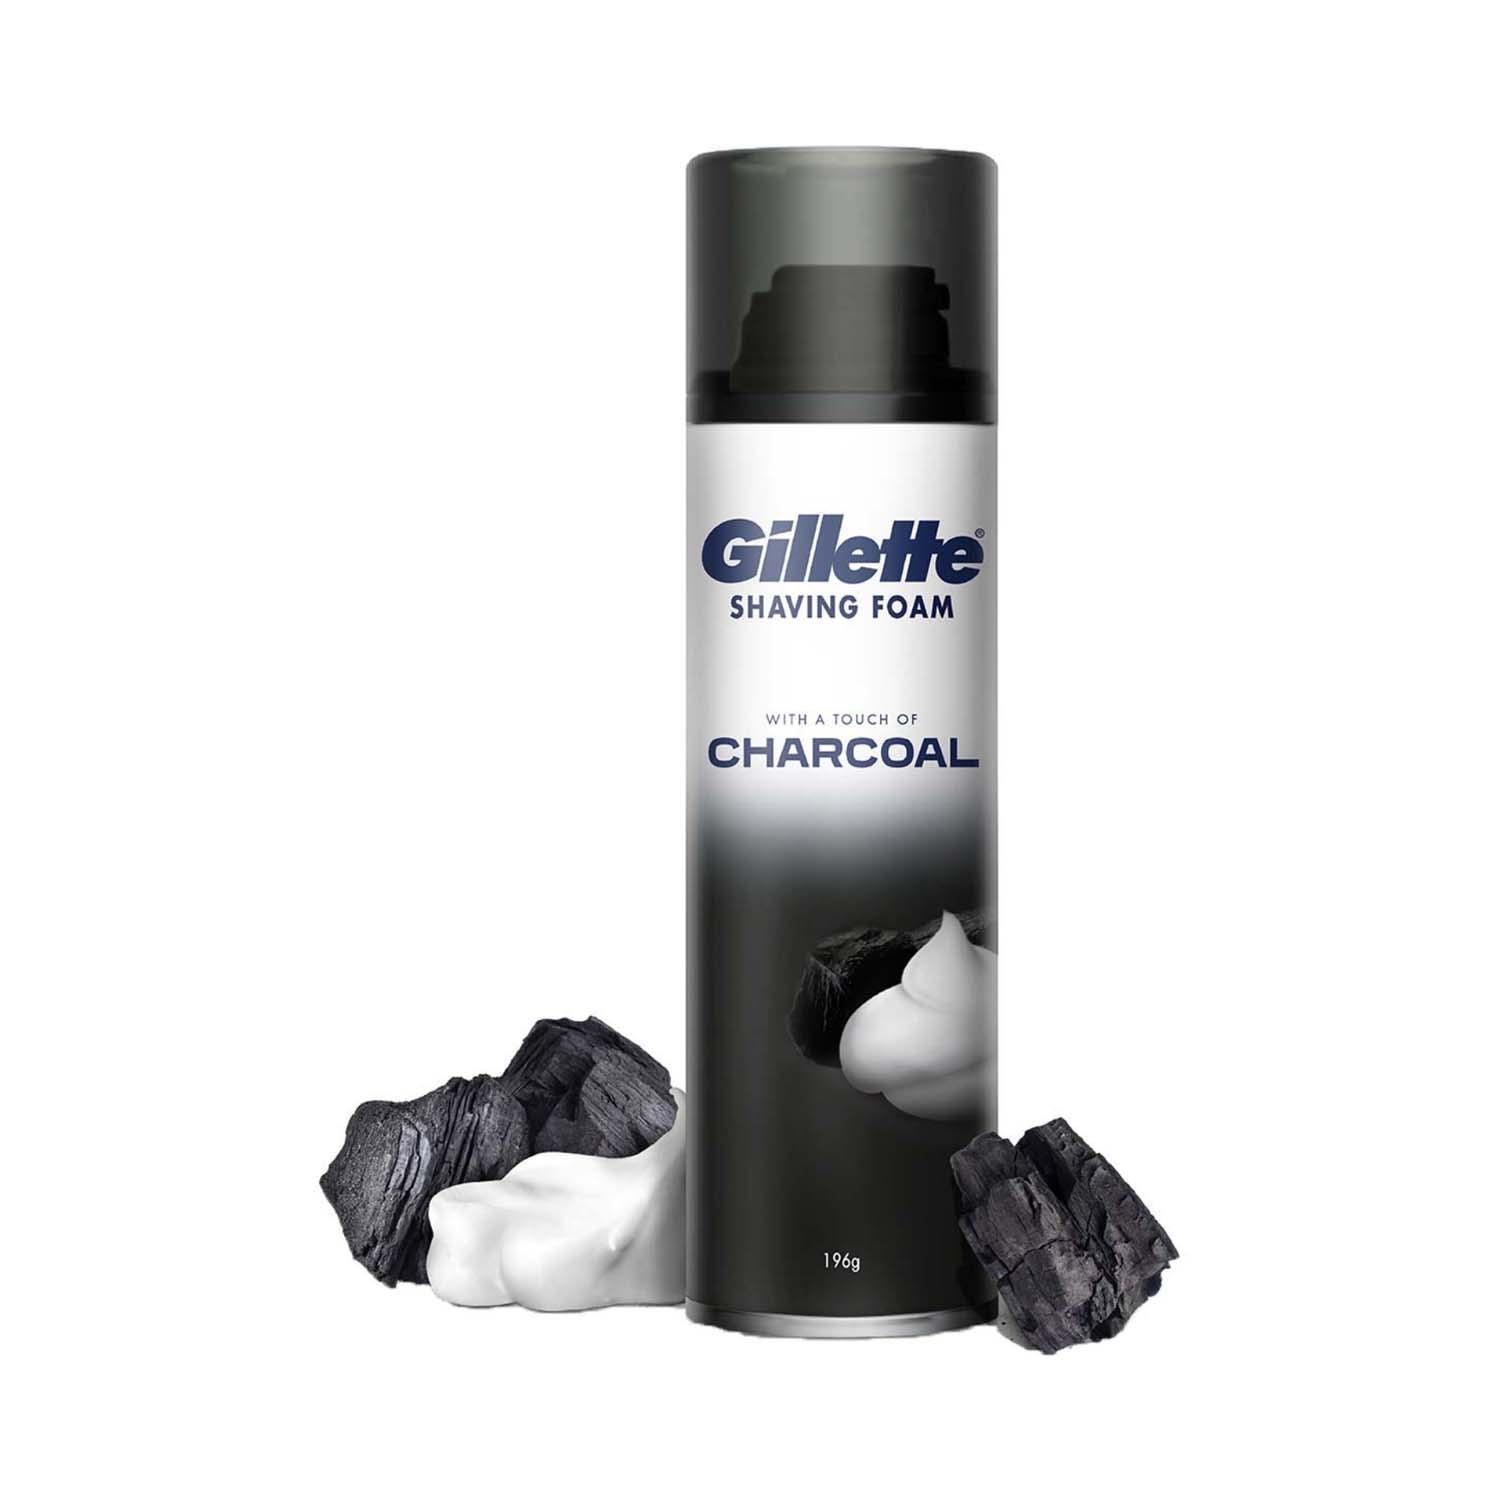 Gillette | Gillette Charcoal Pre Shaving Foam (196g)